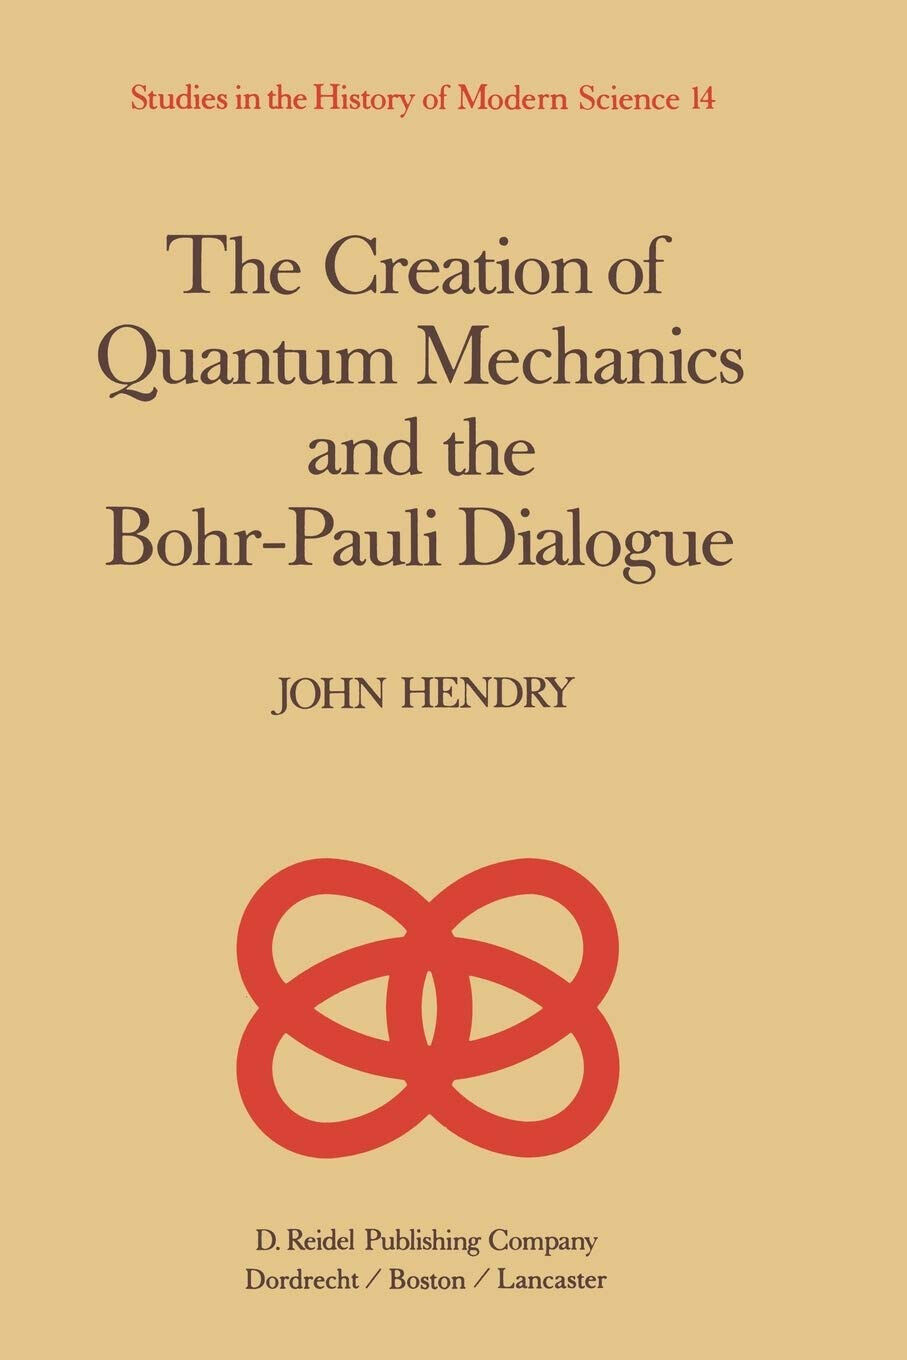 The Creation of Quantum Mechanics and the Bohr-Pauli Dialogue - 2013